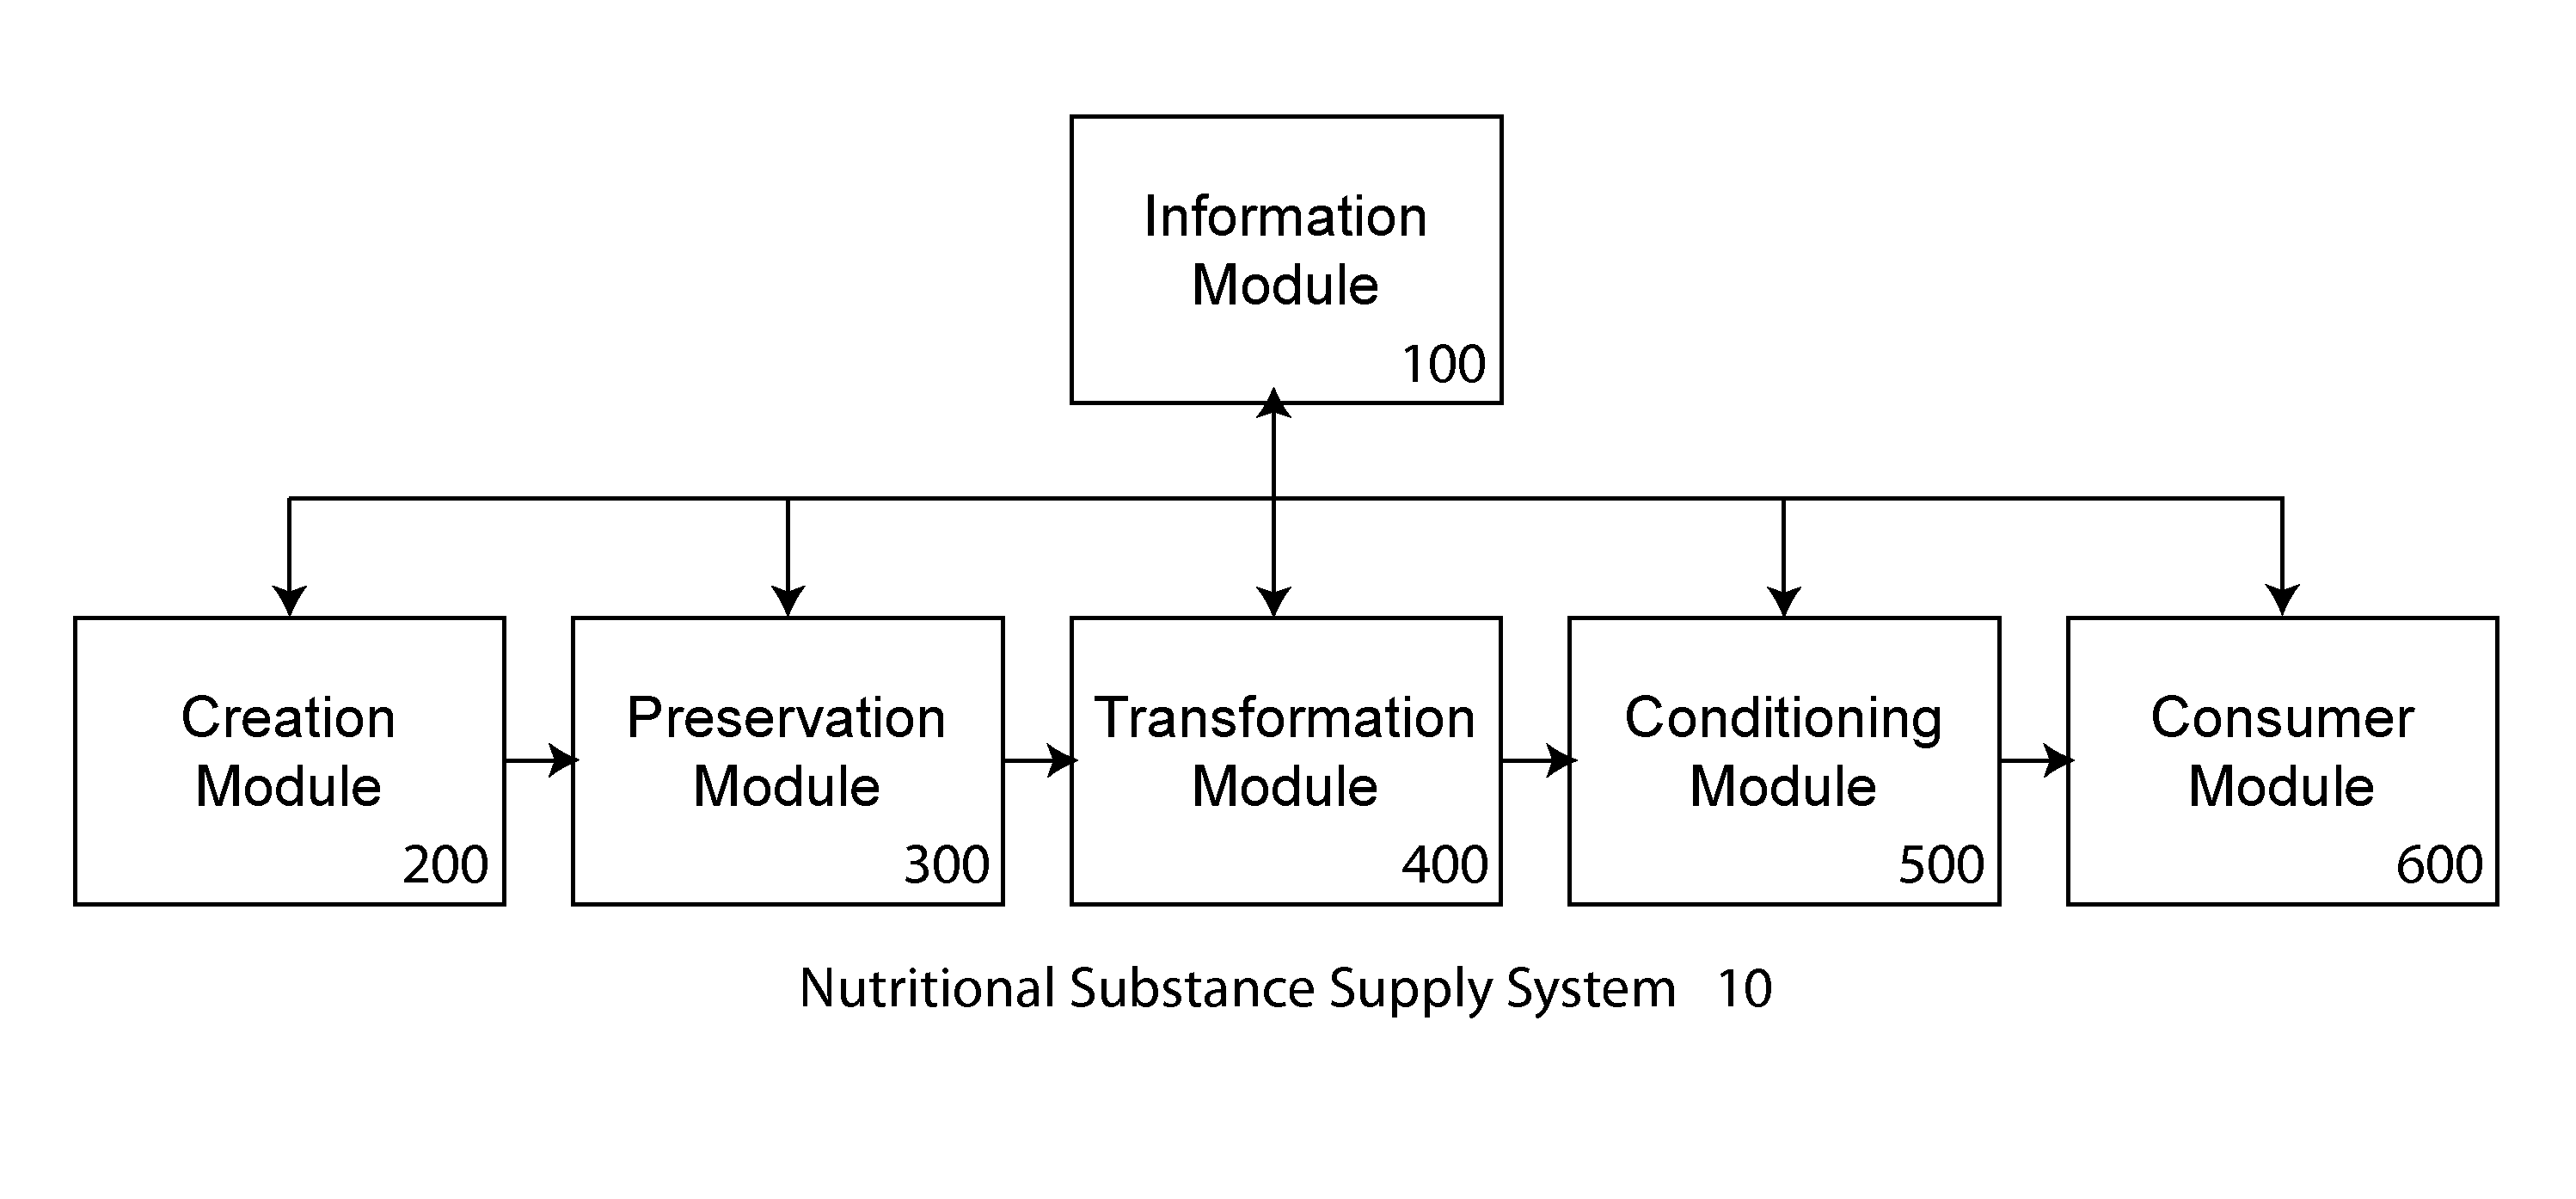 Information system for nutritional substances